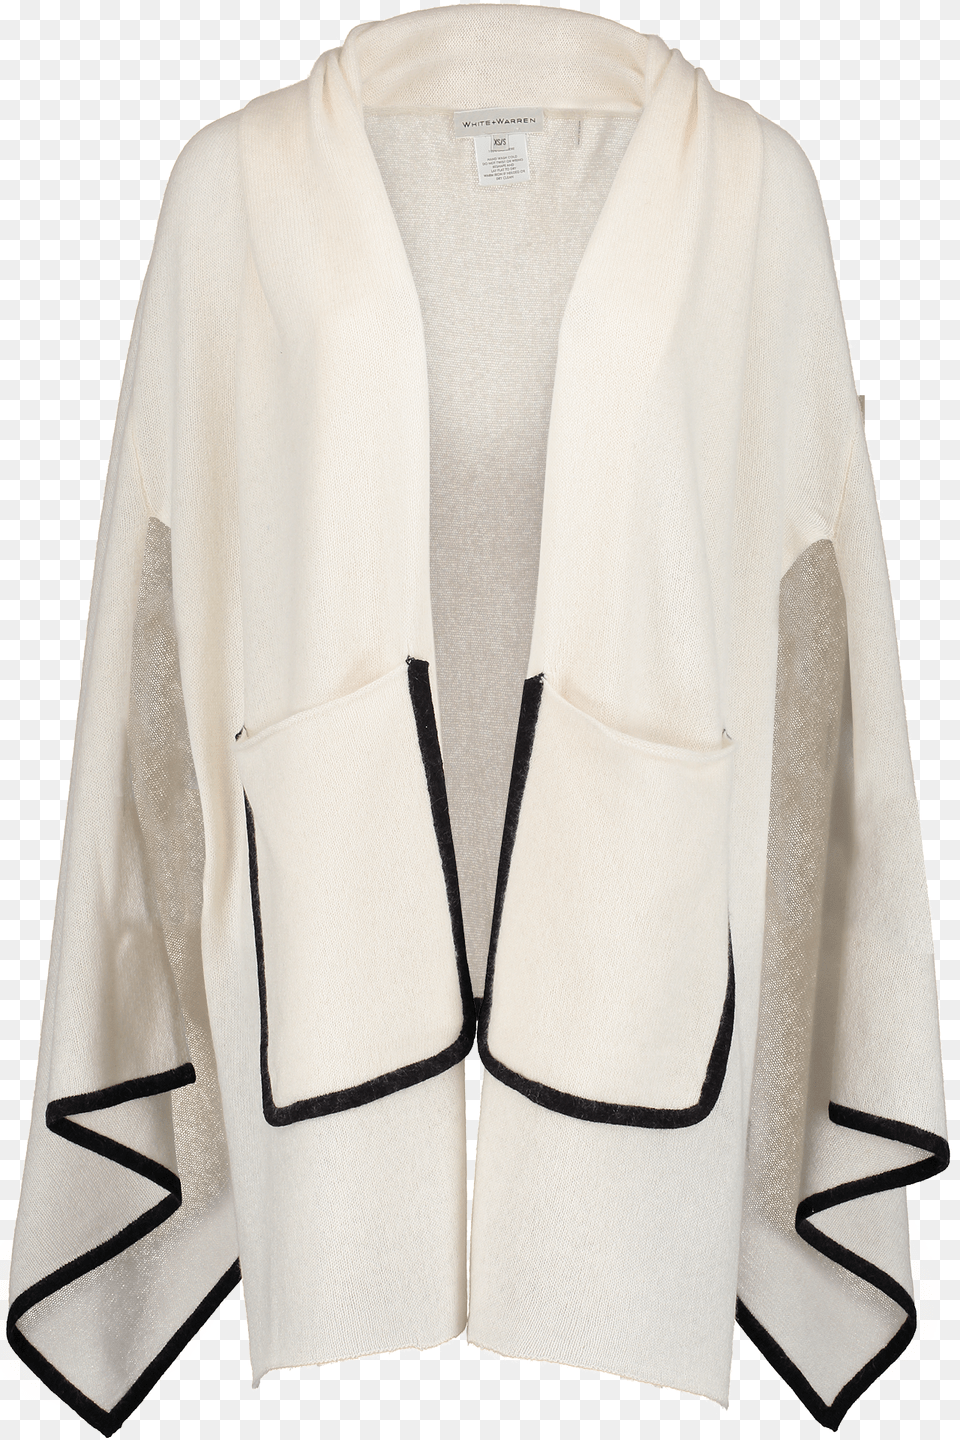 Contrast Tipped Cape Whiteblack Clothes Hanger, Blazer, Clothing, Coat, Jacket Free Transparent Png